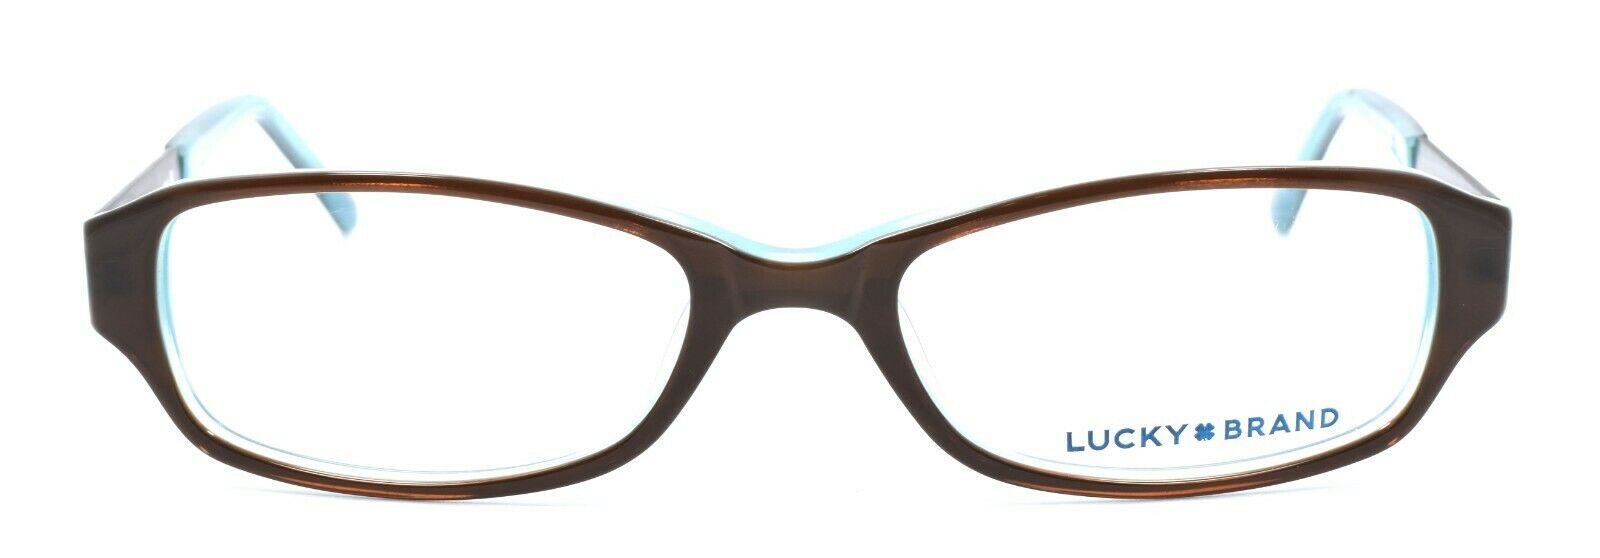 2-LUCKY BRAND Jade Women's Eyeglasses Frames PETITE 48-16-130 Brown / Blue + CASE-751286136524-IKSpecs